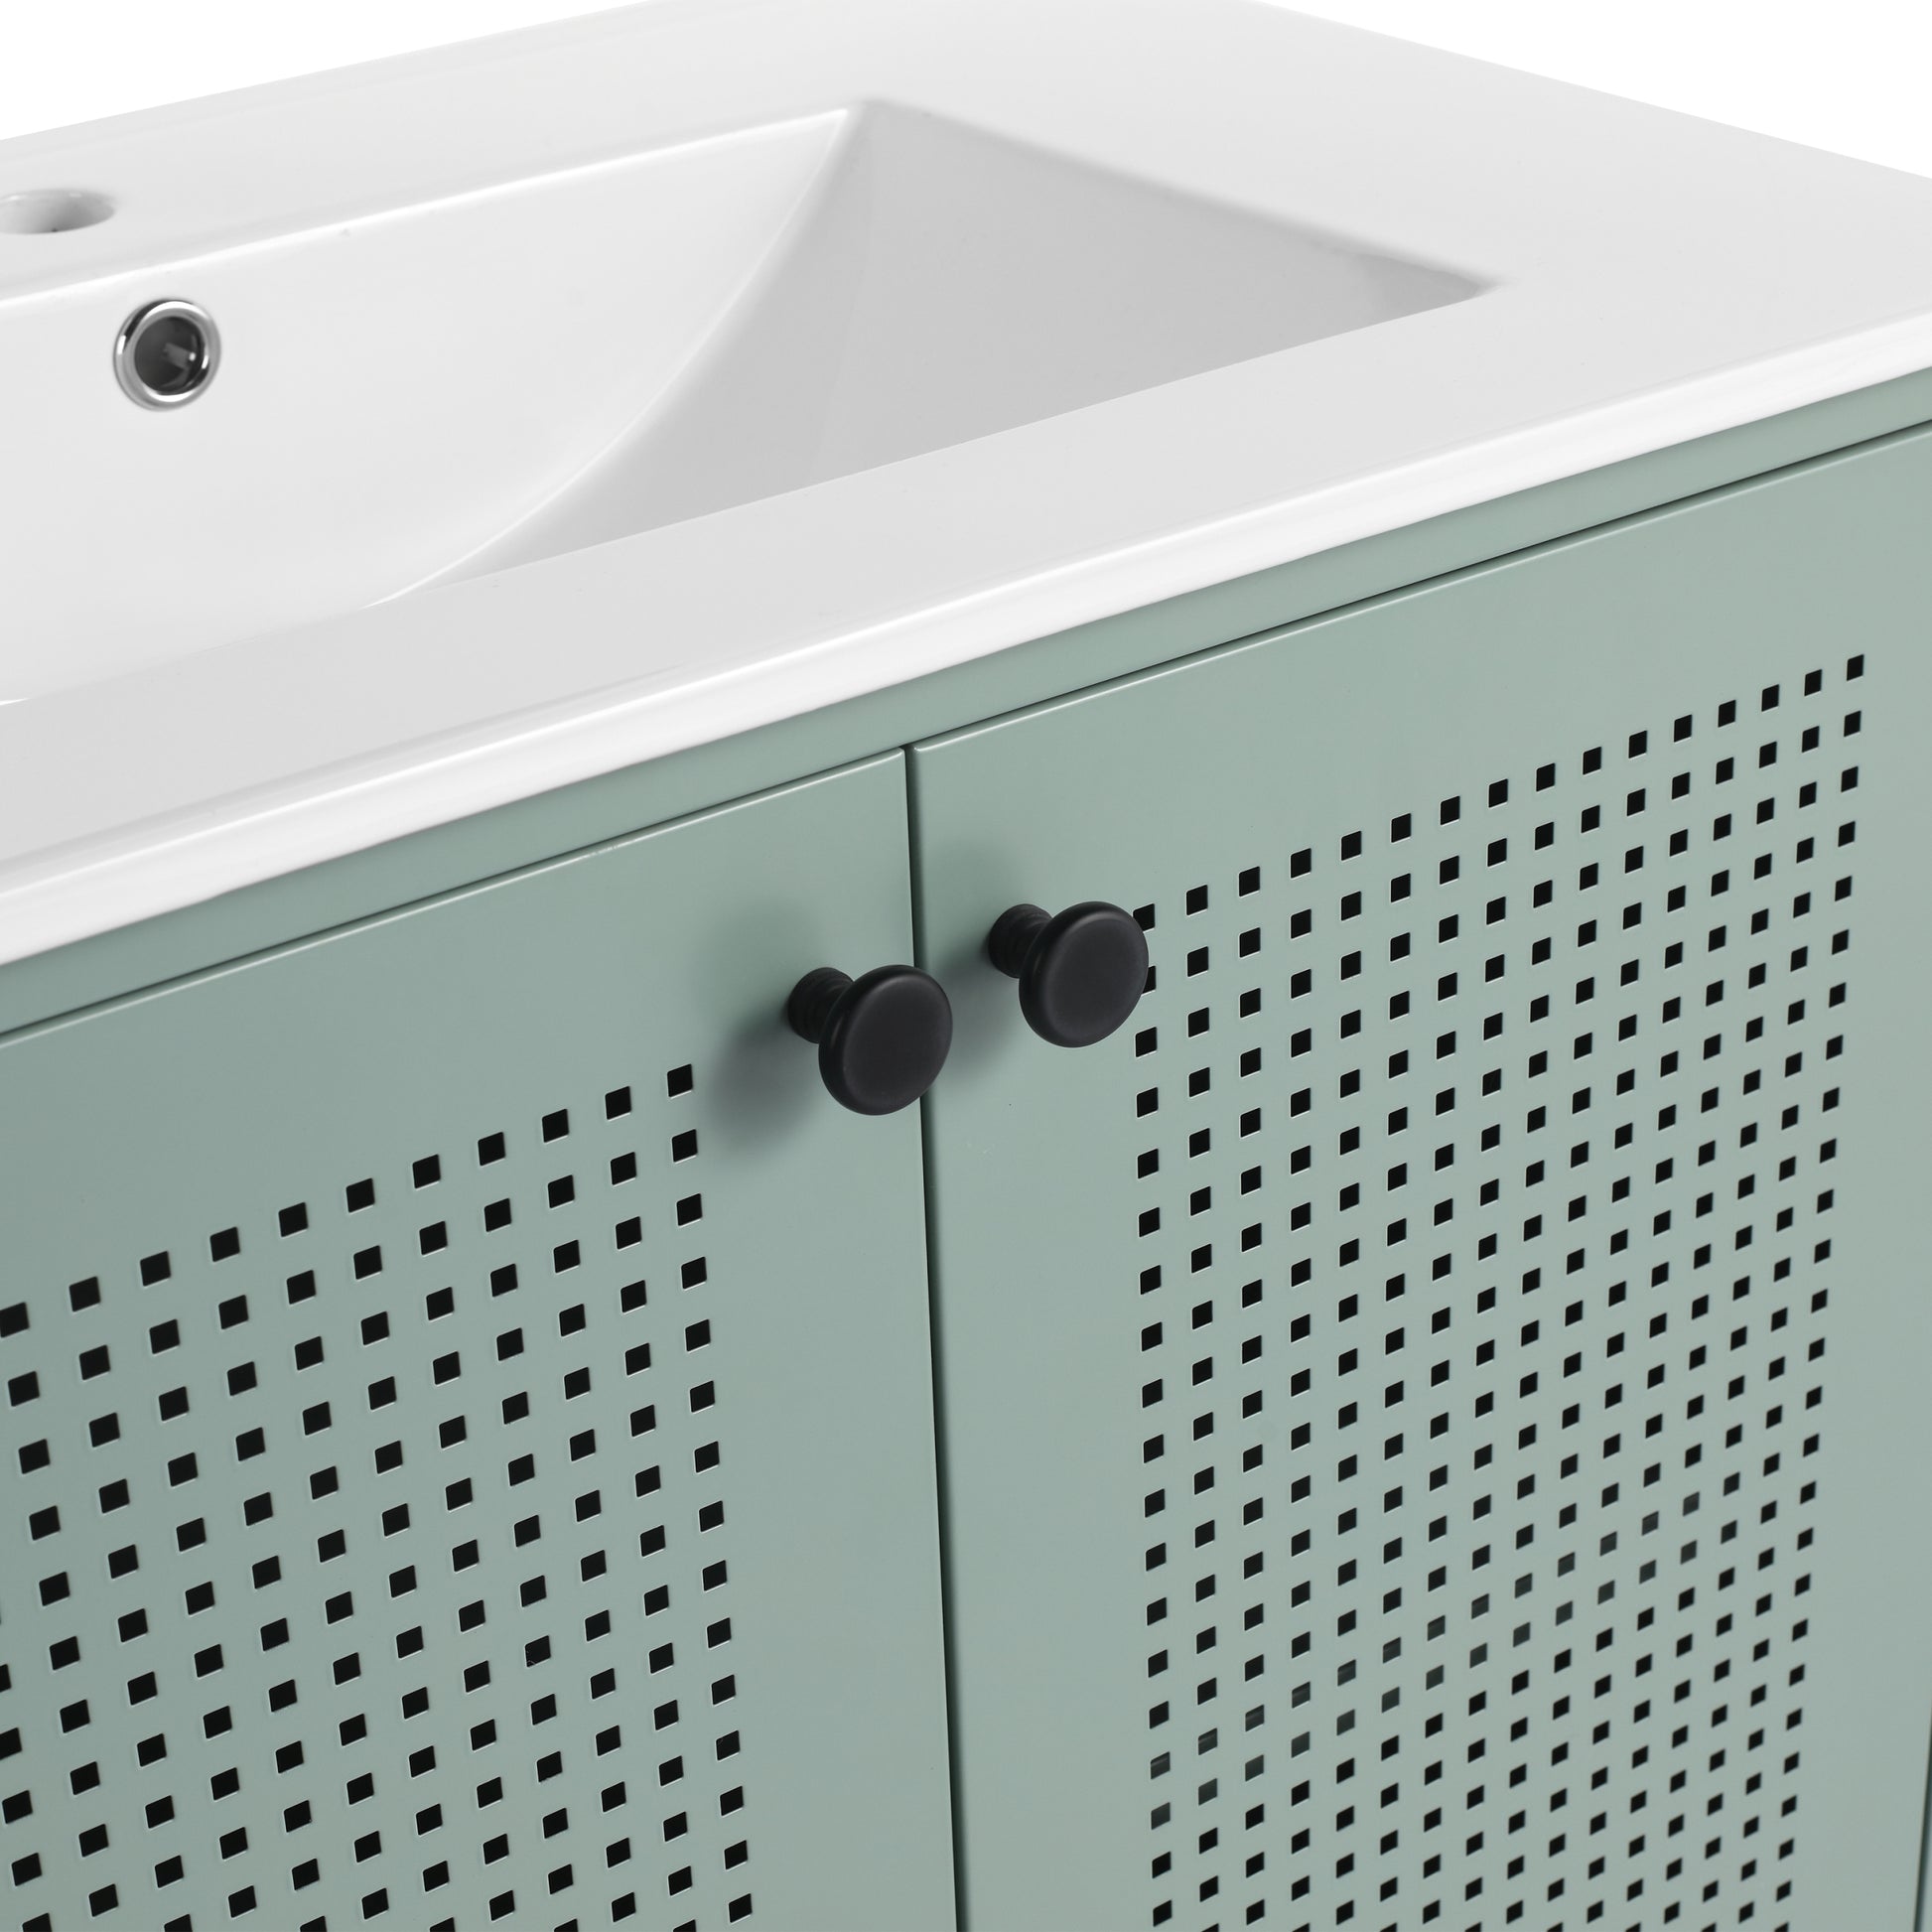 30 Inch Freestanding Bathroom Vanity With Ceramic SInk mint green-2-bathroom-freestanding-modern-steel